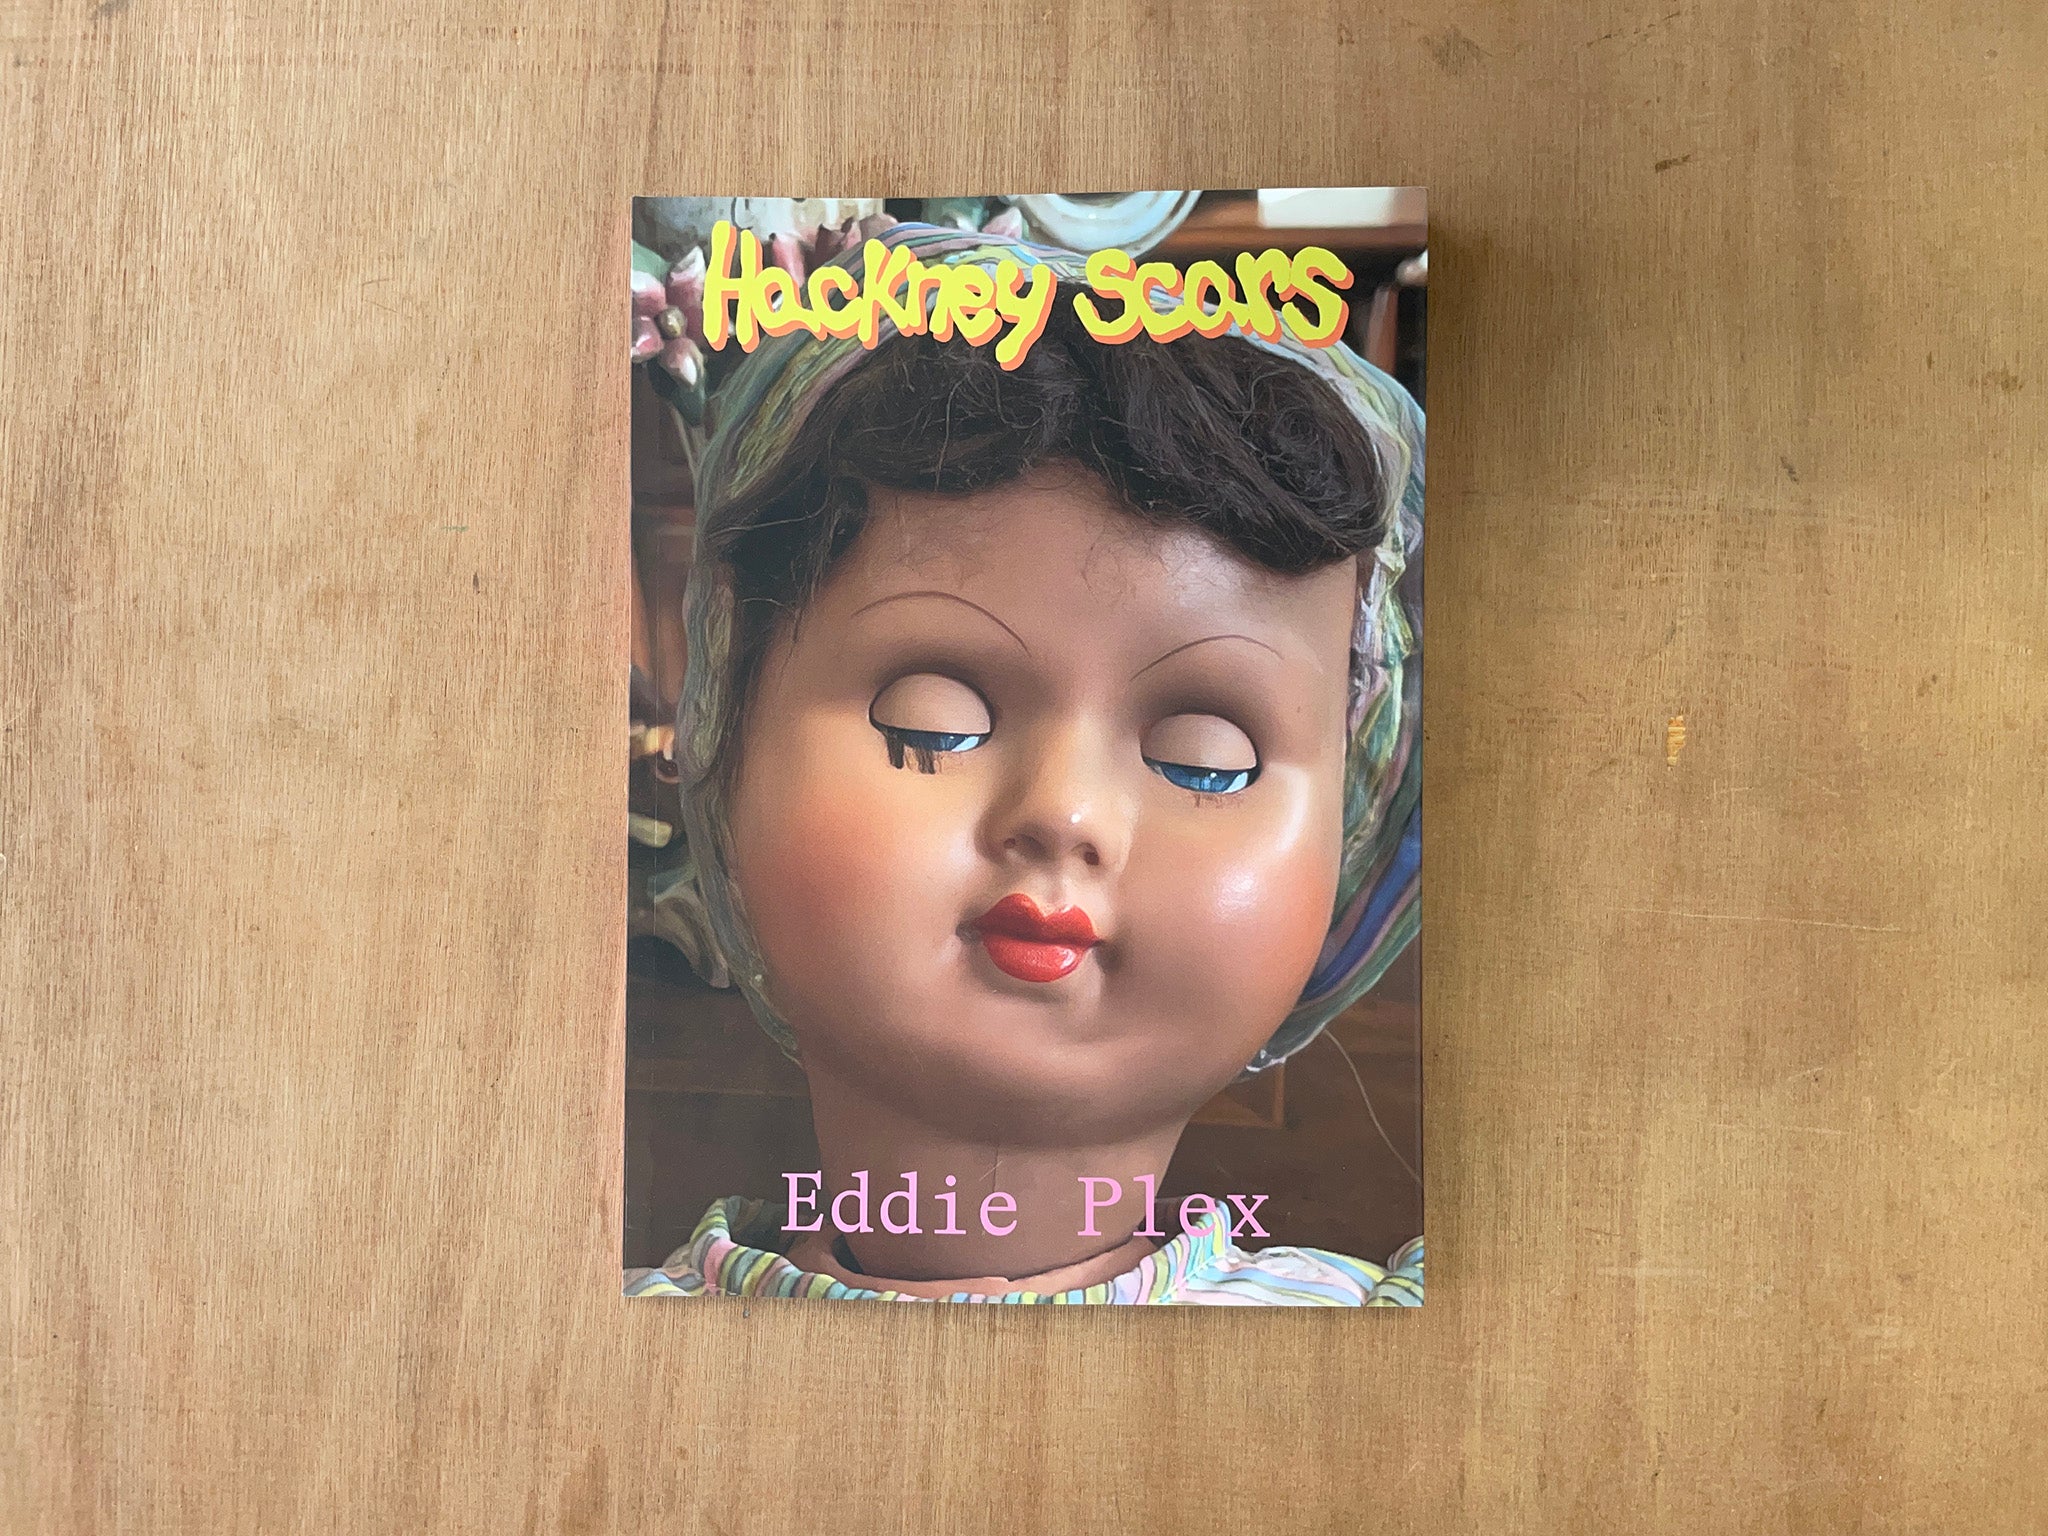 HACKNEY SCARS by Eddie Plex